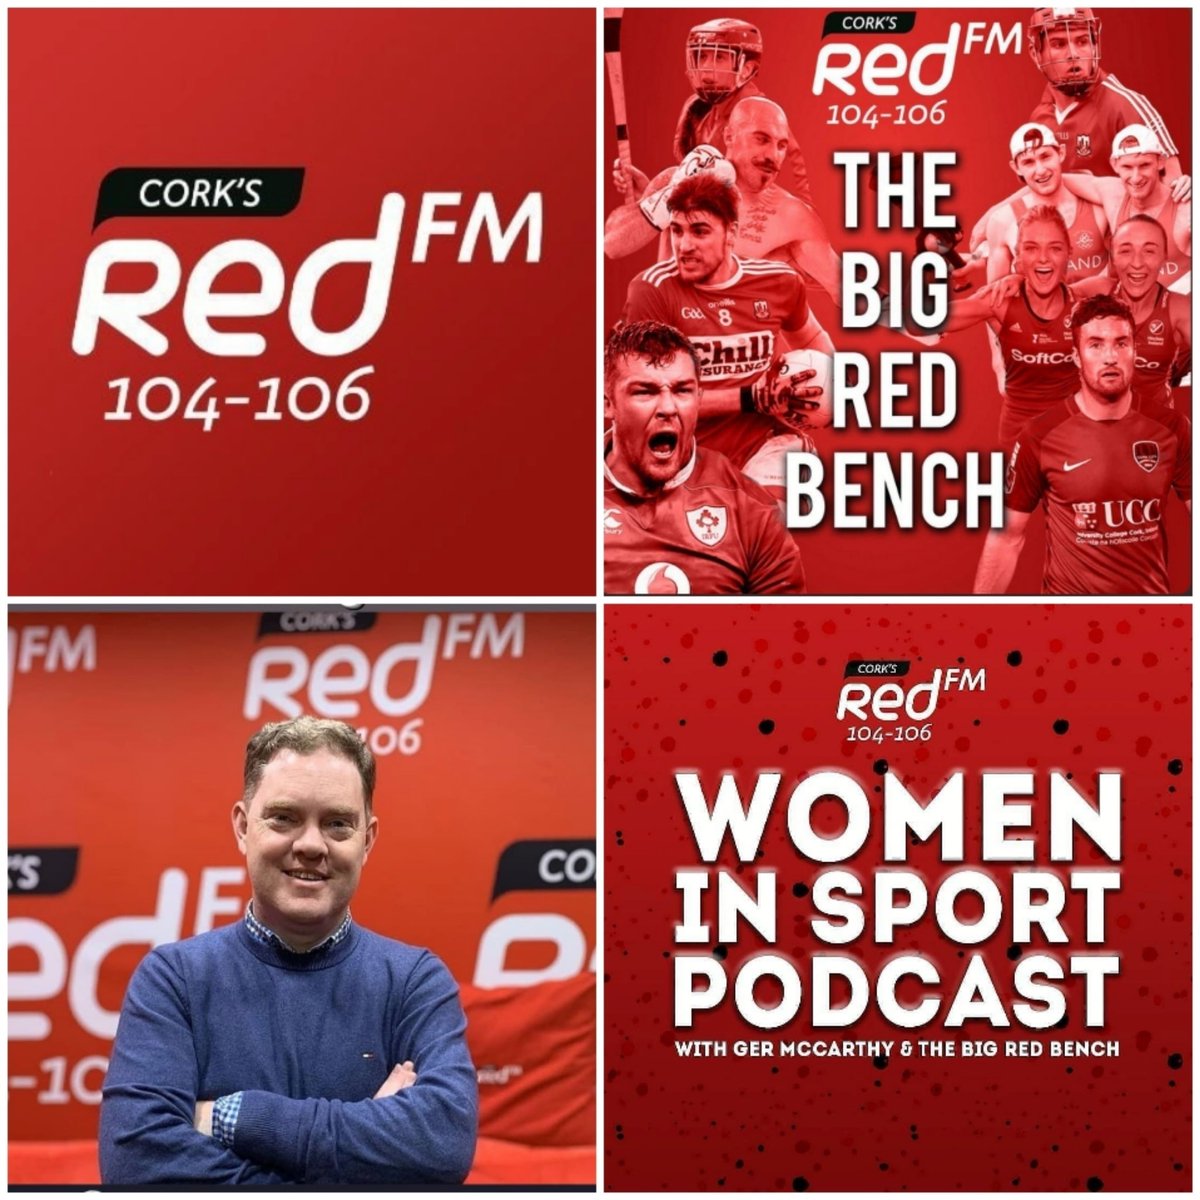 🚨 @CorksRedFM @BigRedBench #WomenInSport #podcast 🚨 ⭐️ @SkibbereenRugby @AverylCondell ⭐️ @MunsterWomen @wendstar8 ⭐️ @aflw_ireland @curranem ⭐️ @FormulaFemales @macktweets_ ⭐️ @CorkCamogie Fiona Neville @DonieDaly ⭐️ @CorkLGFA @spronayne 🎧 redfm.ie/podcast/the-wo…